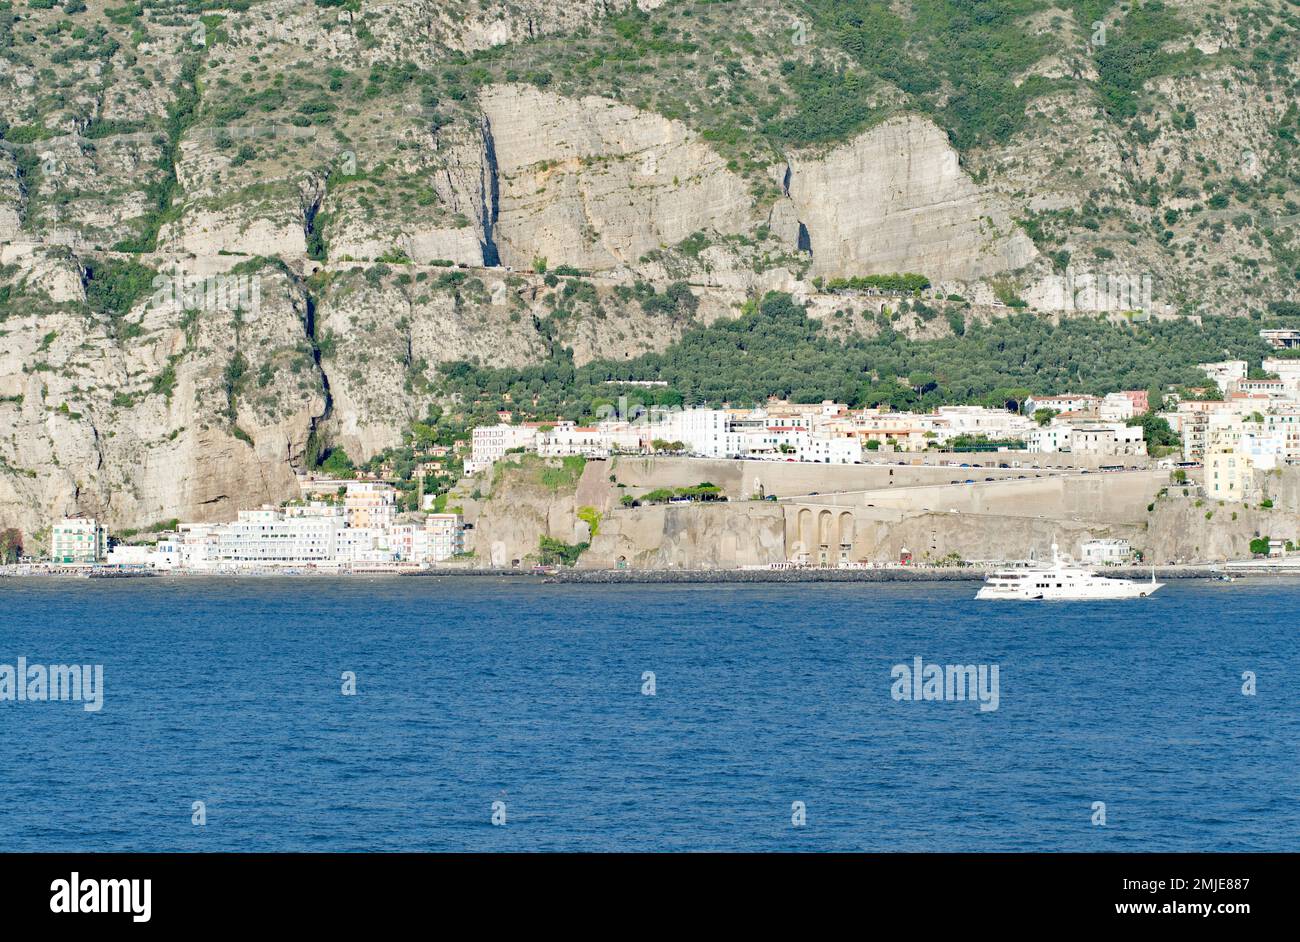 Sorrento Italy Azmara Cruise Stock Photo